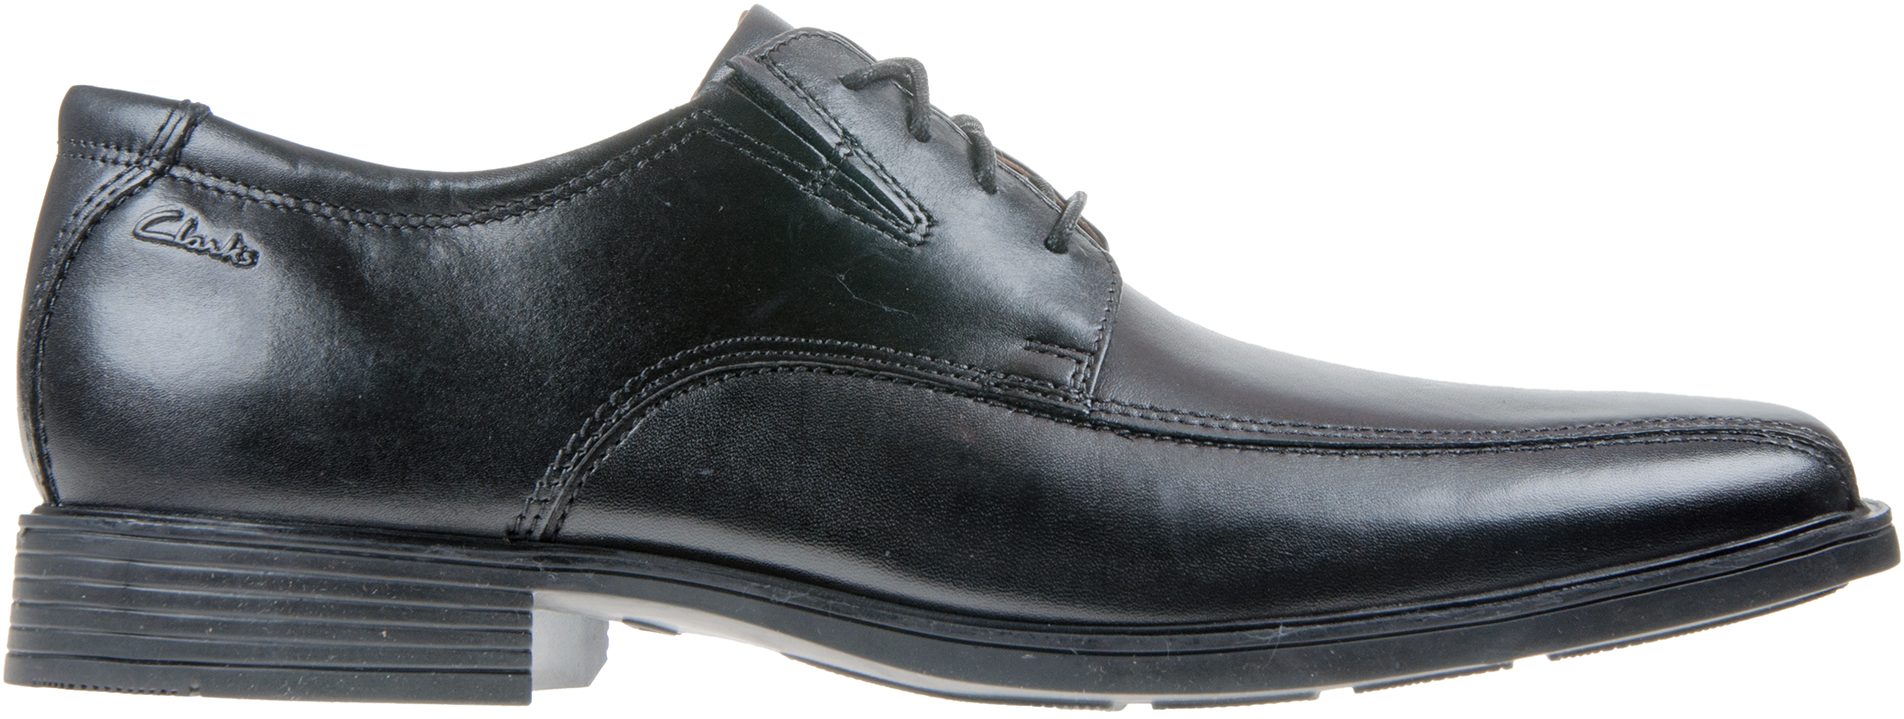 Clarks Tilden Walk Black 26110310 - Formal Shoes - Humphries Shoes